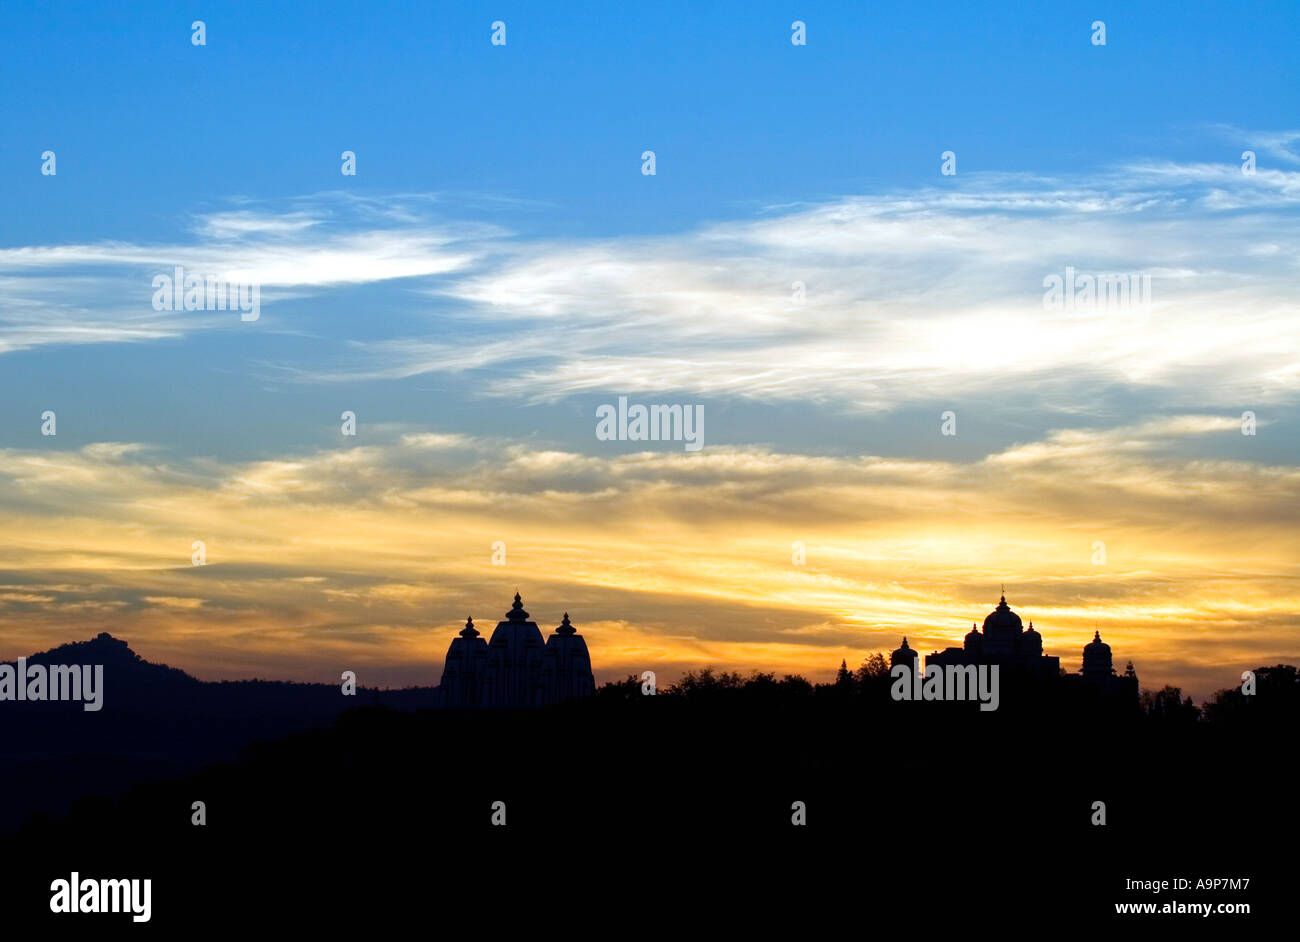 Sunrise over Sathya sai baba Ashram in Puttaparthi showing architectural building silhouettes. Andhra Pradesh, India Stock Photo